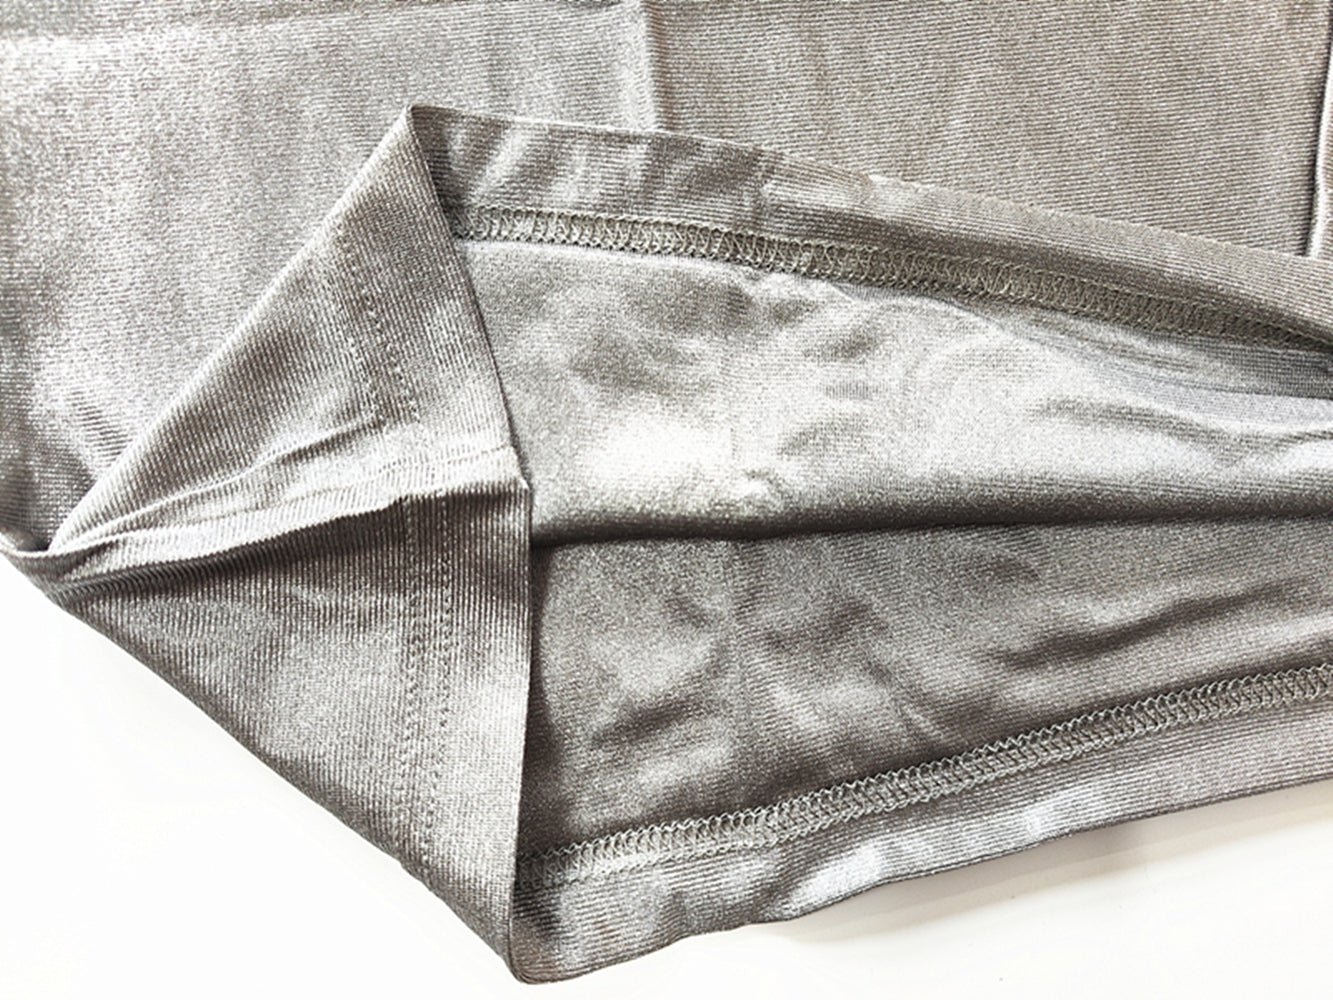 EMF EMI Shielding Anti-Radiation 100% Pure Silver Fiber Clothes-Long Sleeve Tops